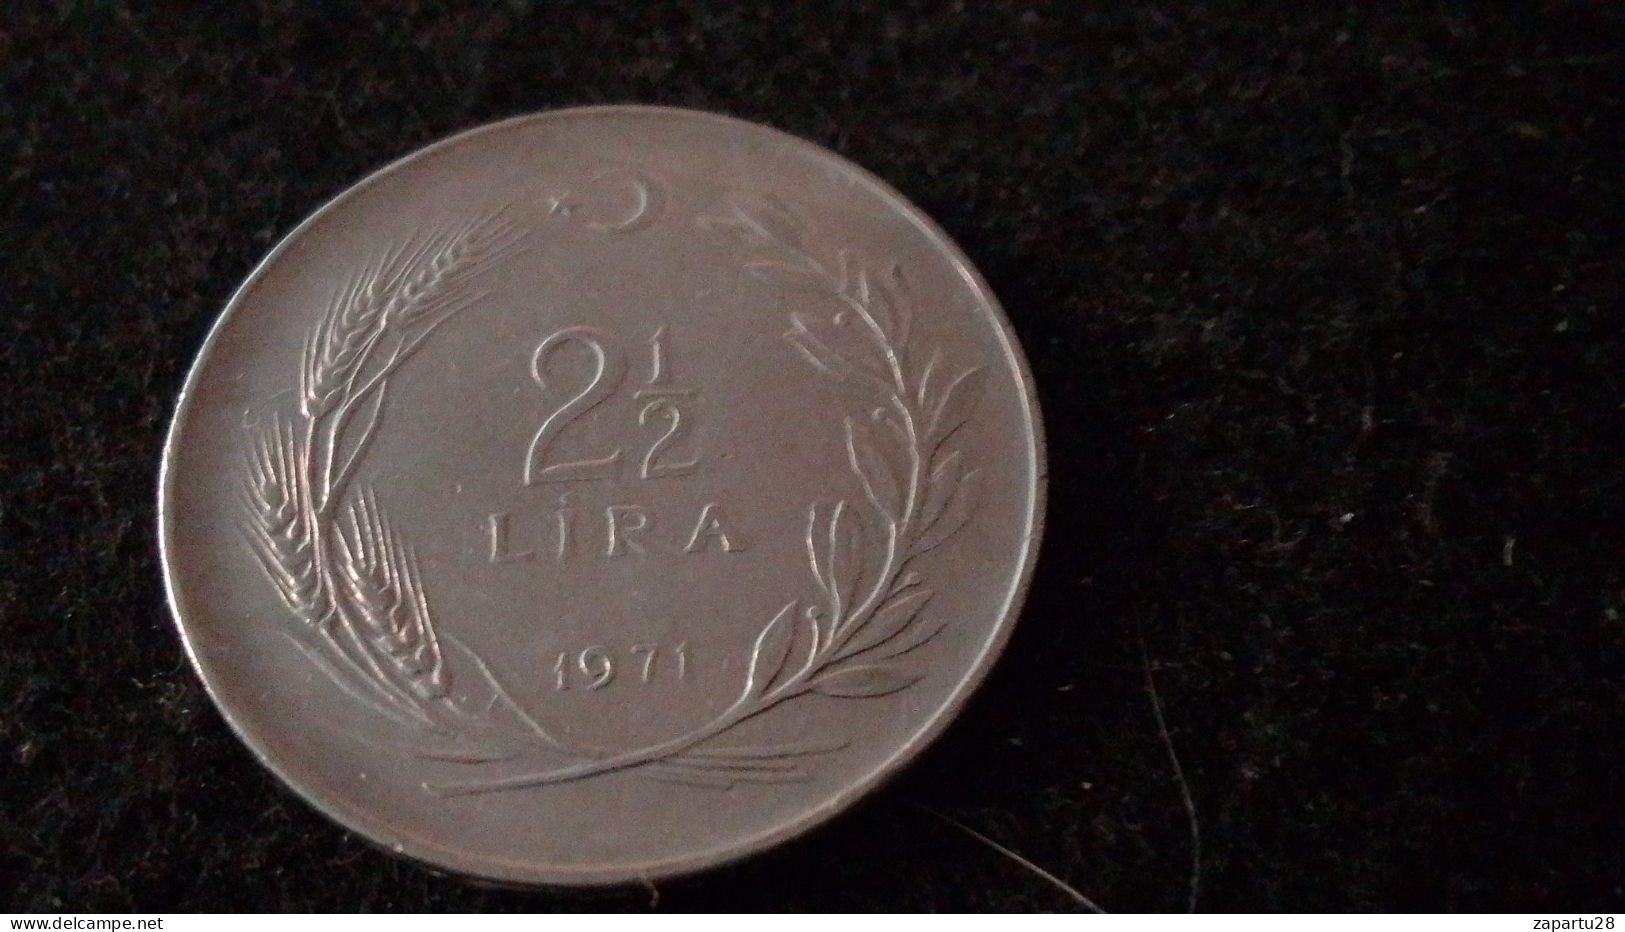 TÜRKİYE - 1971        2.50    LİRA - Turkey